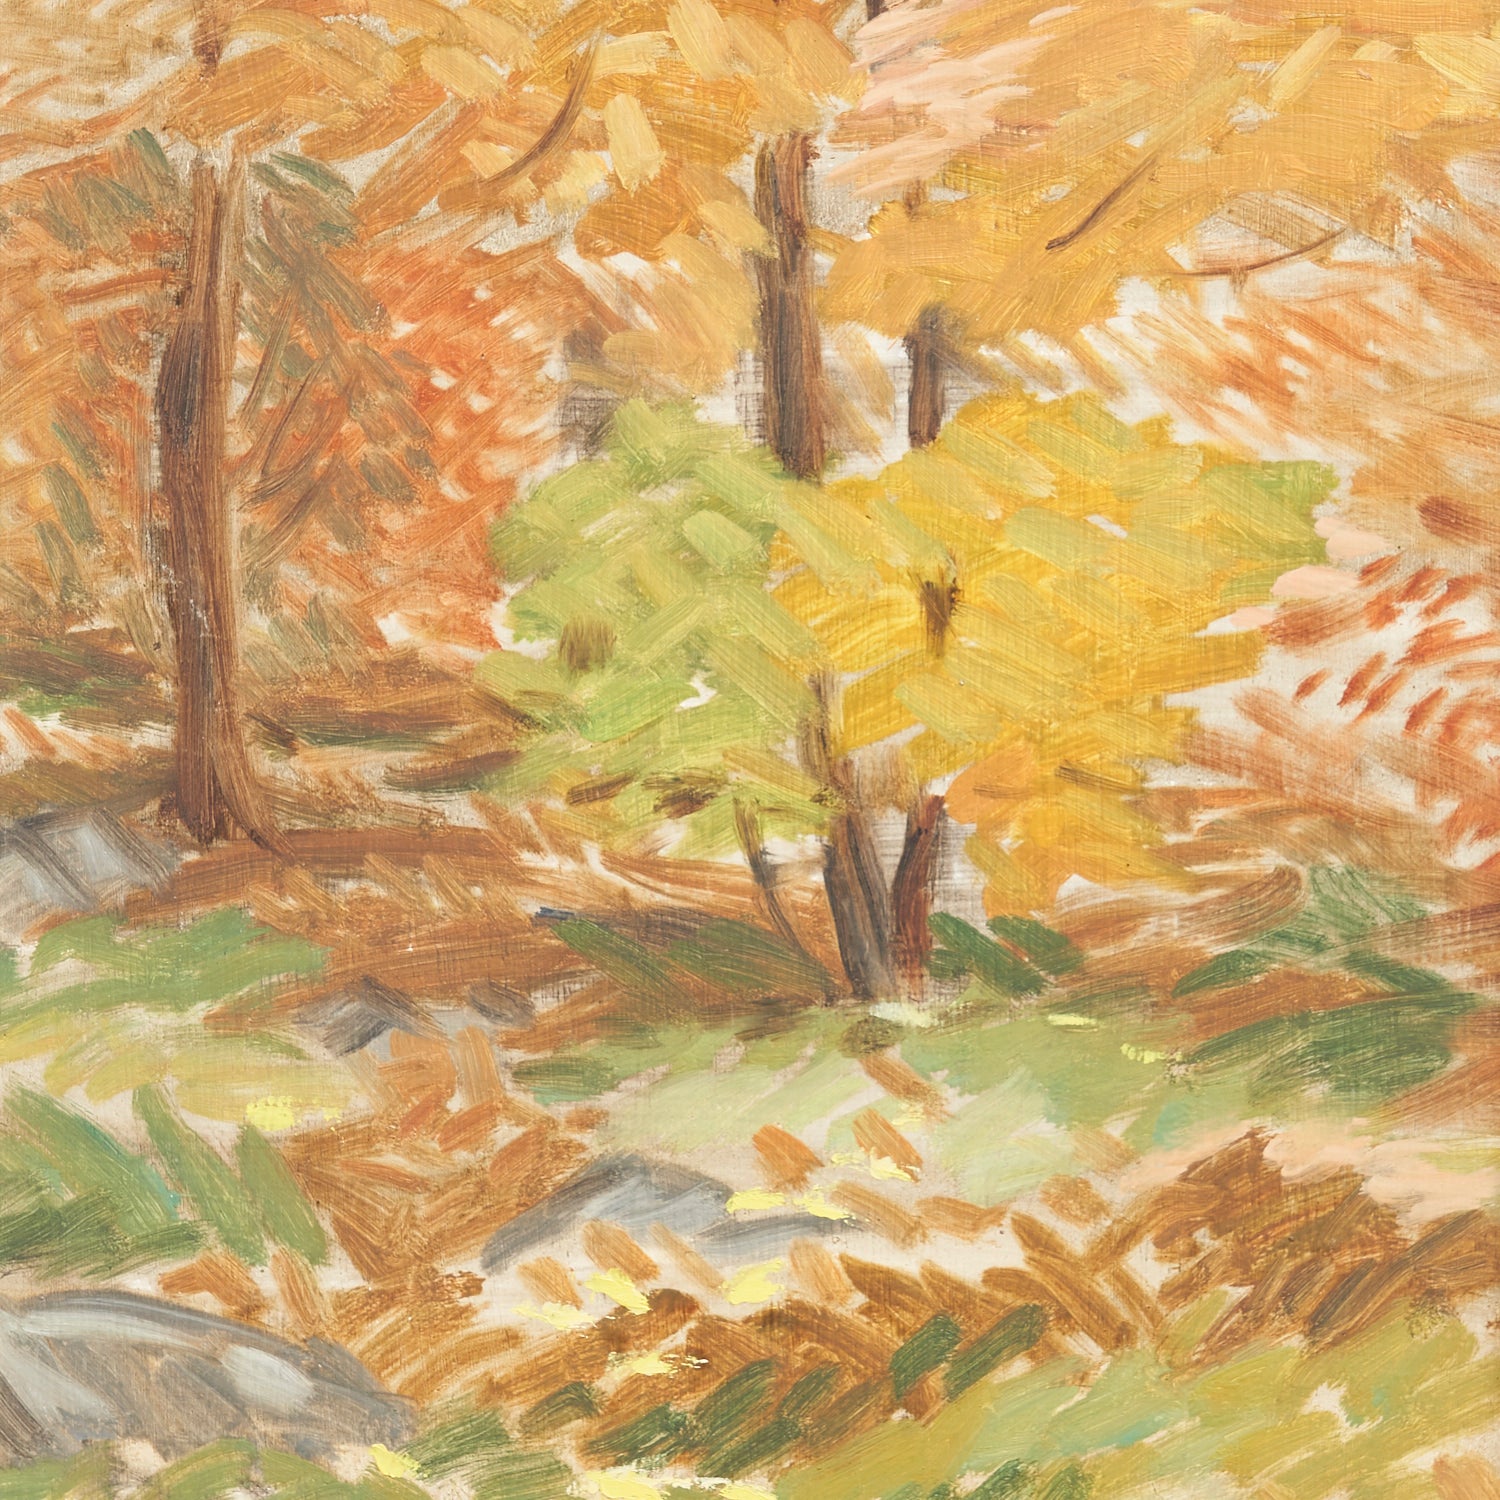 'Yellow Leaves' by John Ensor